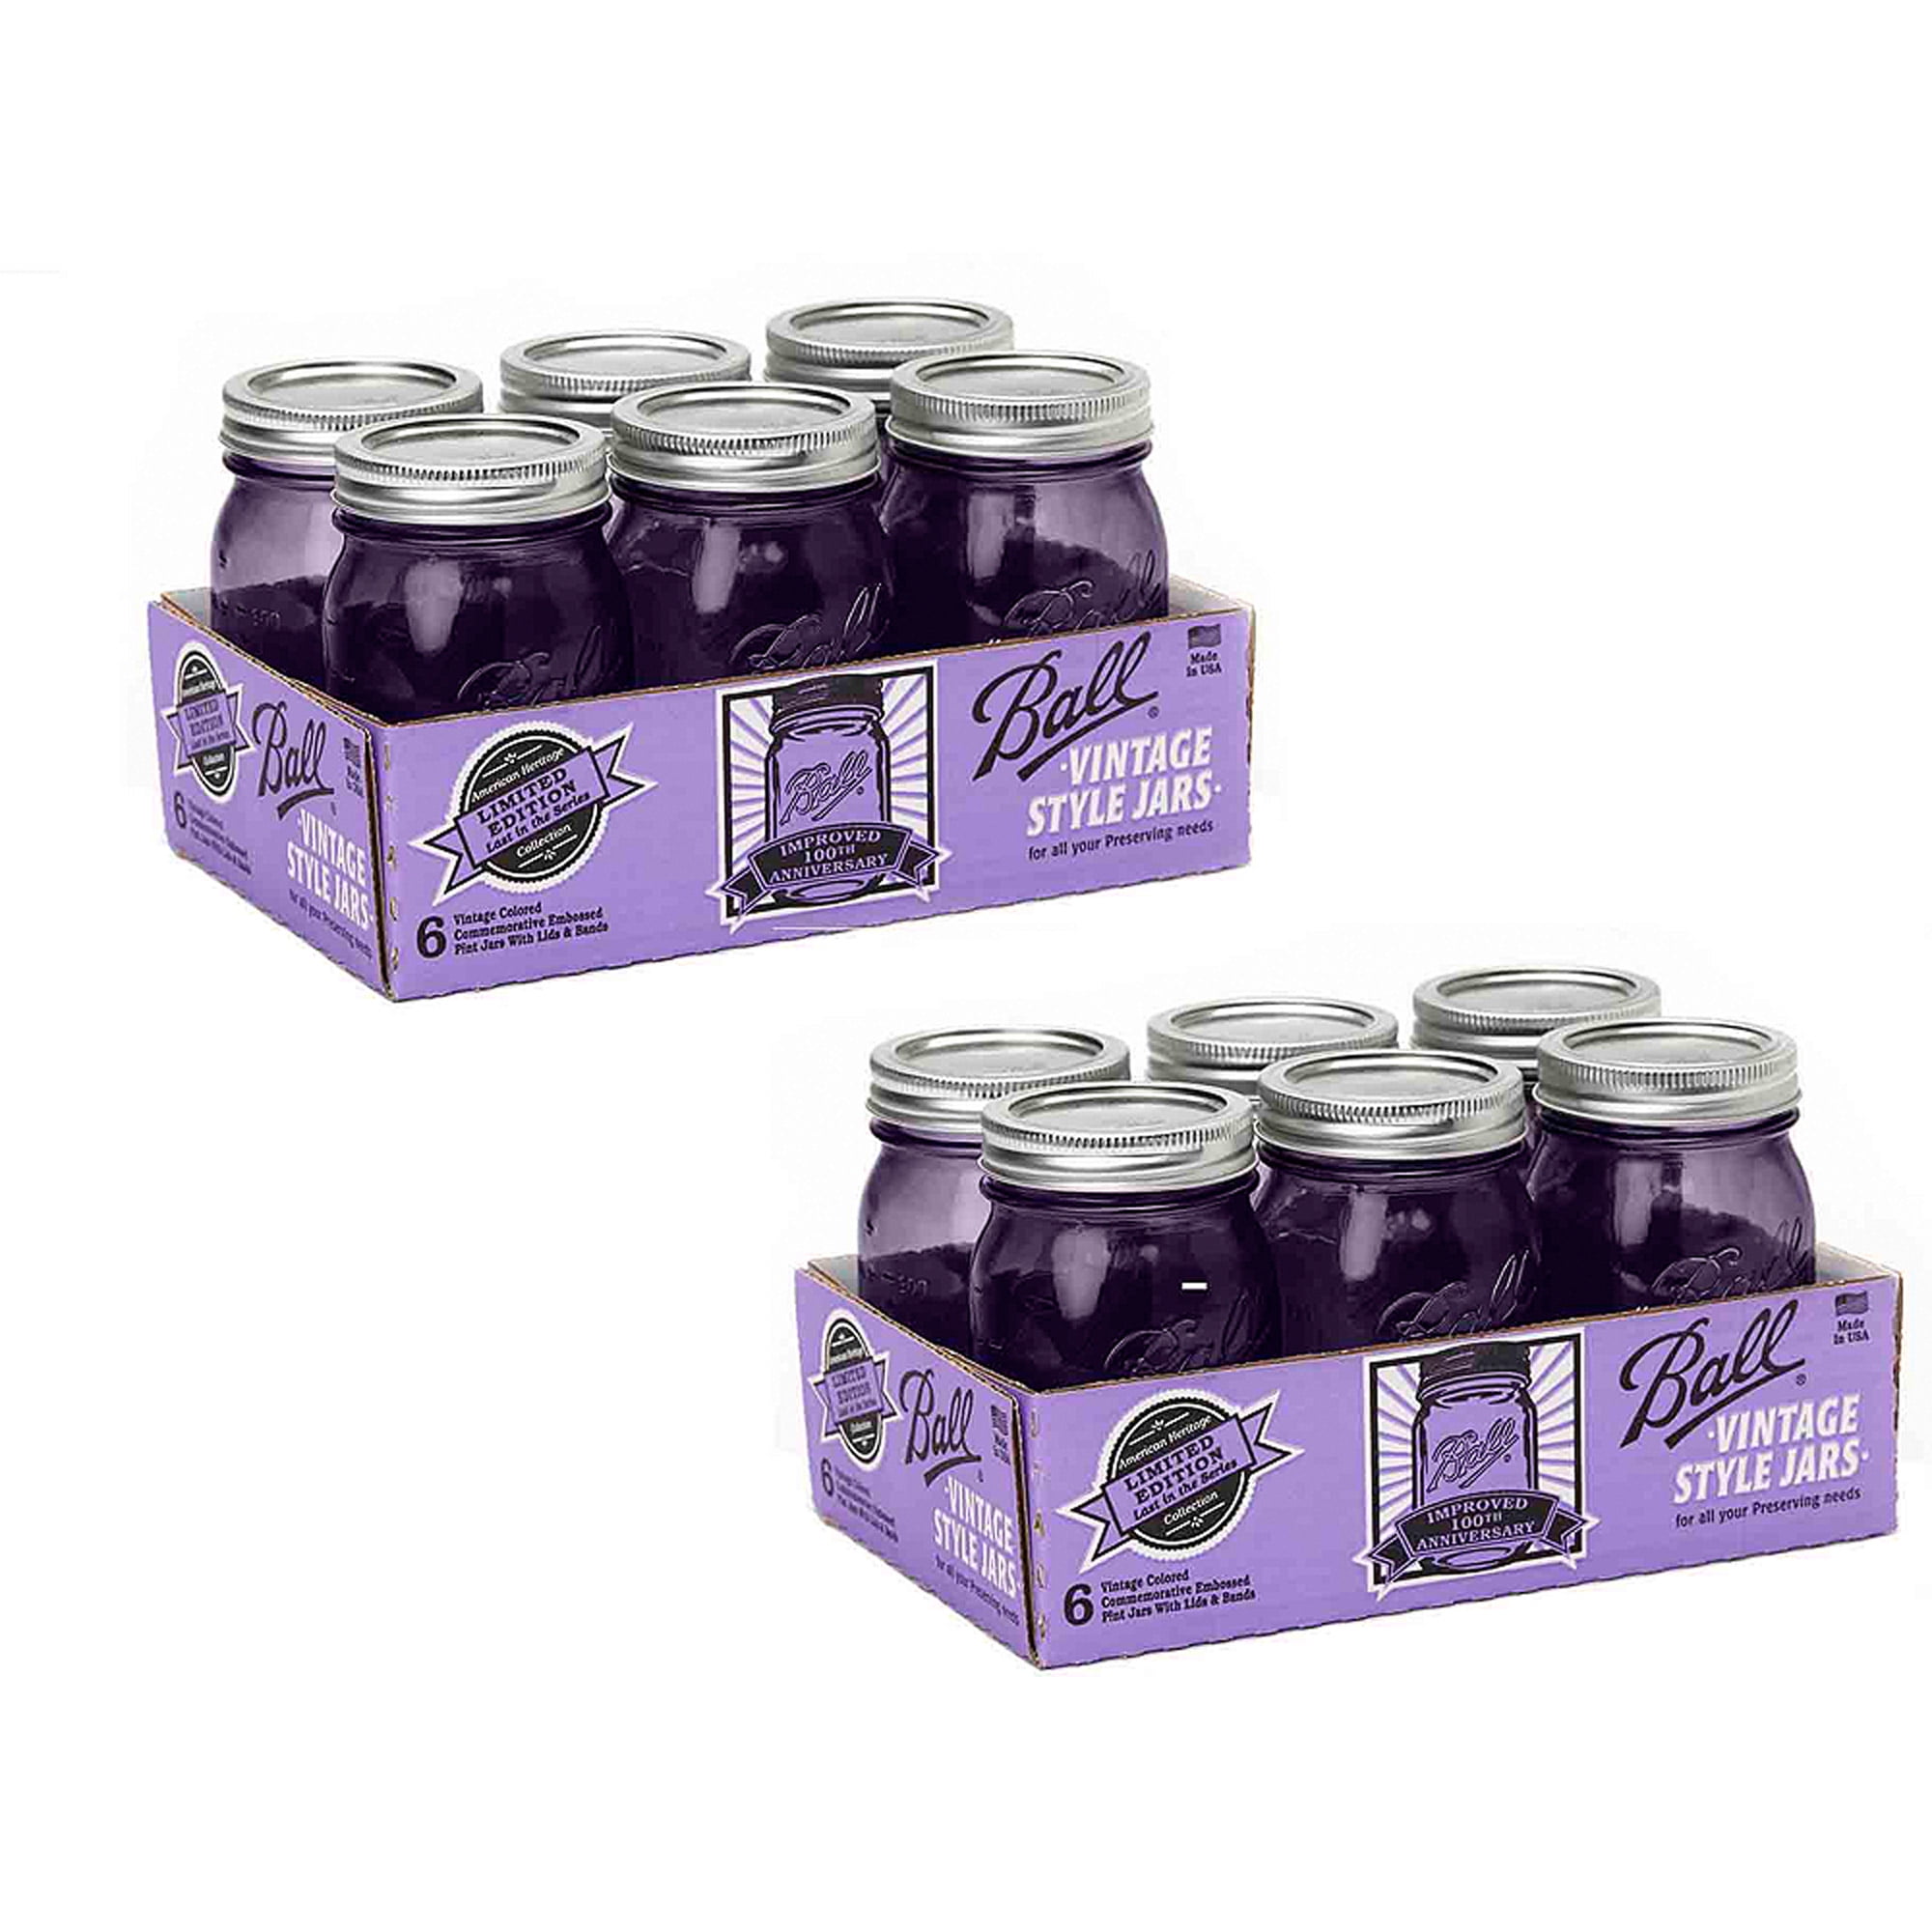 New Ball 2015 Royal Purple Heritage Collection 1 Quart Canning Jars 6PK 